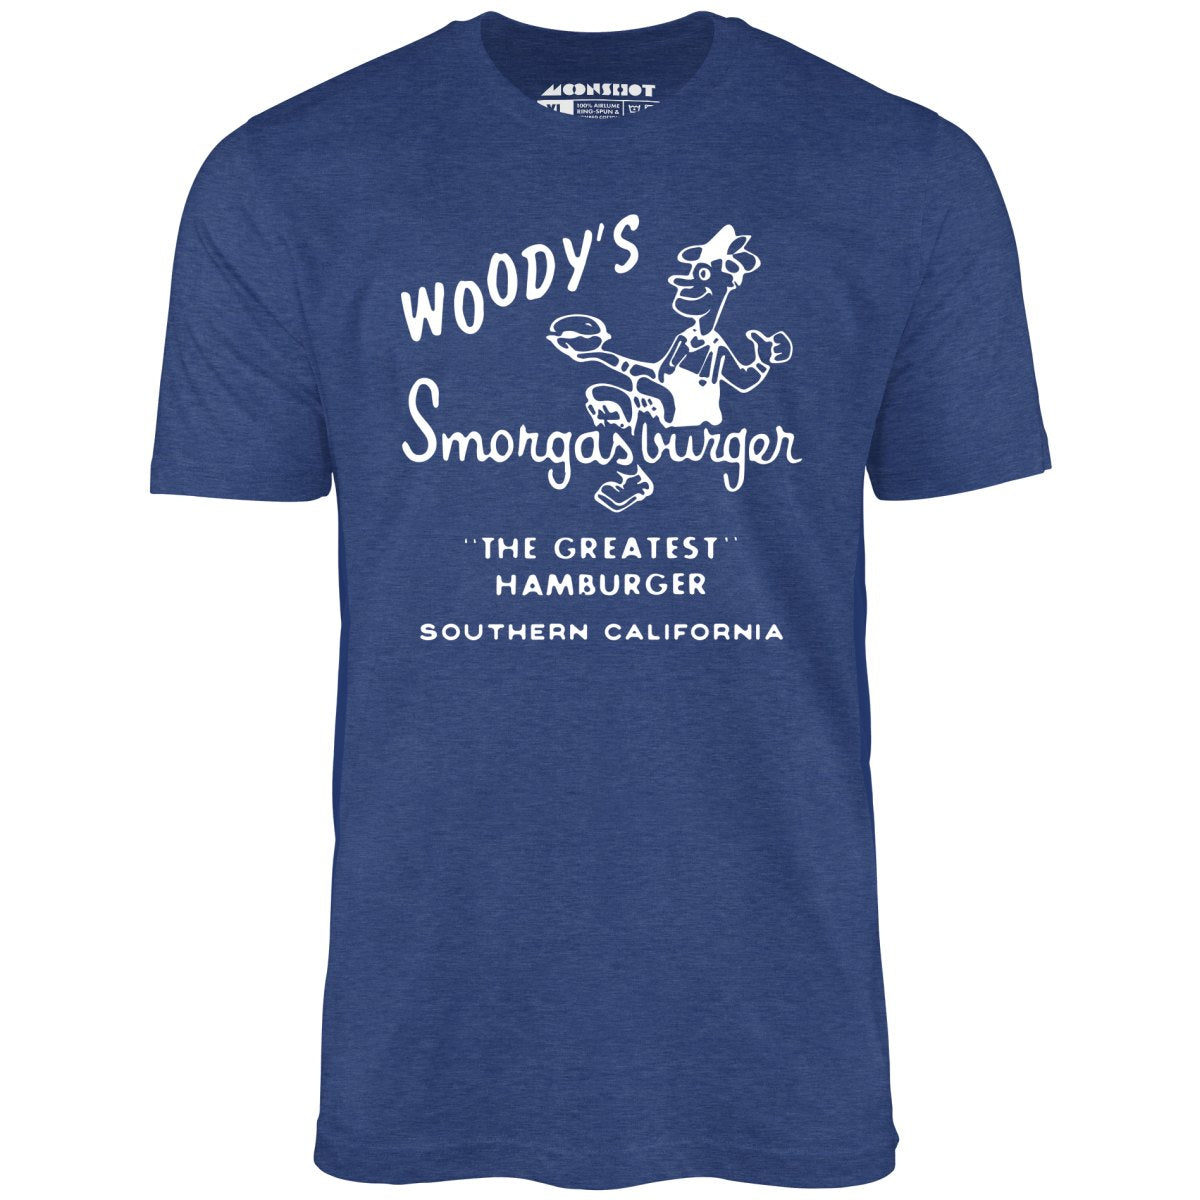 Woody's Smorgasburger - California - Vintage Restaurant - Unisex T-Shirt